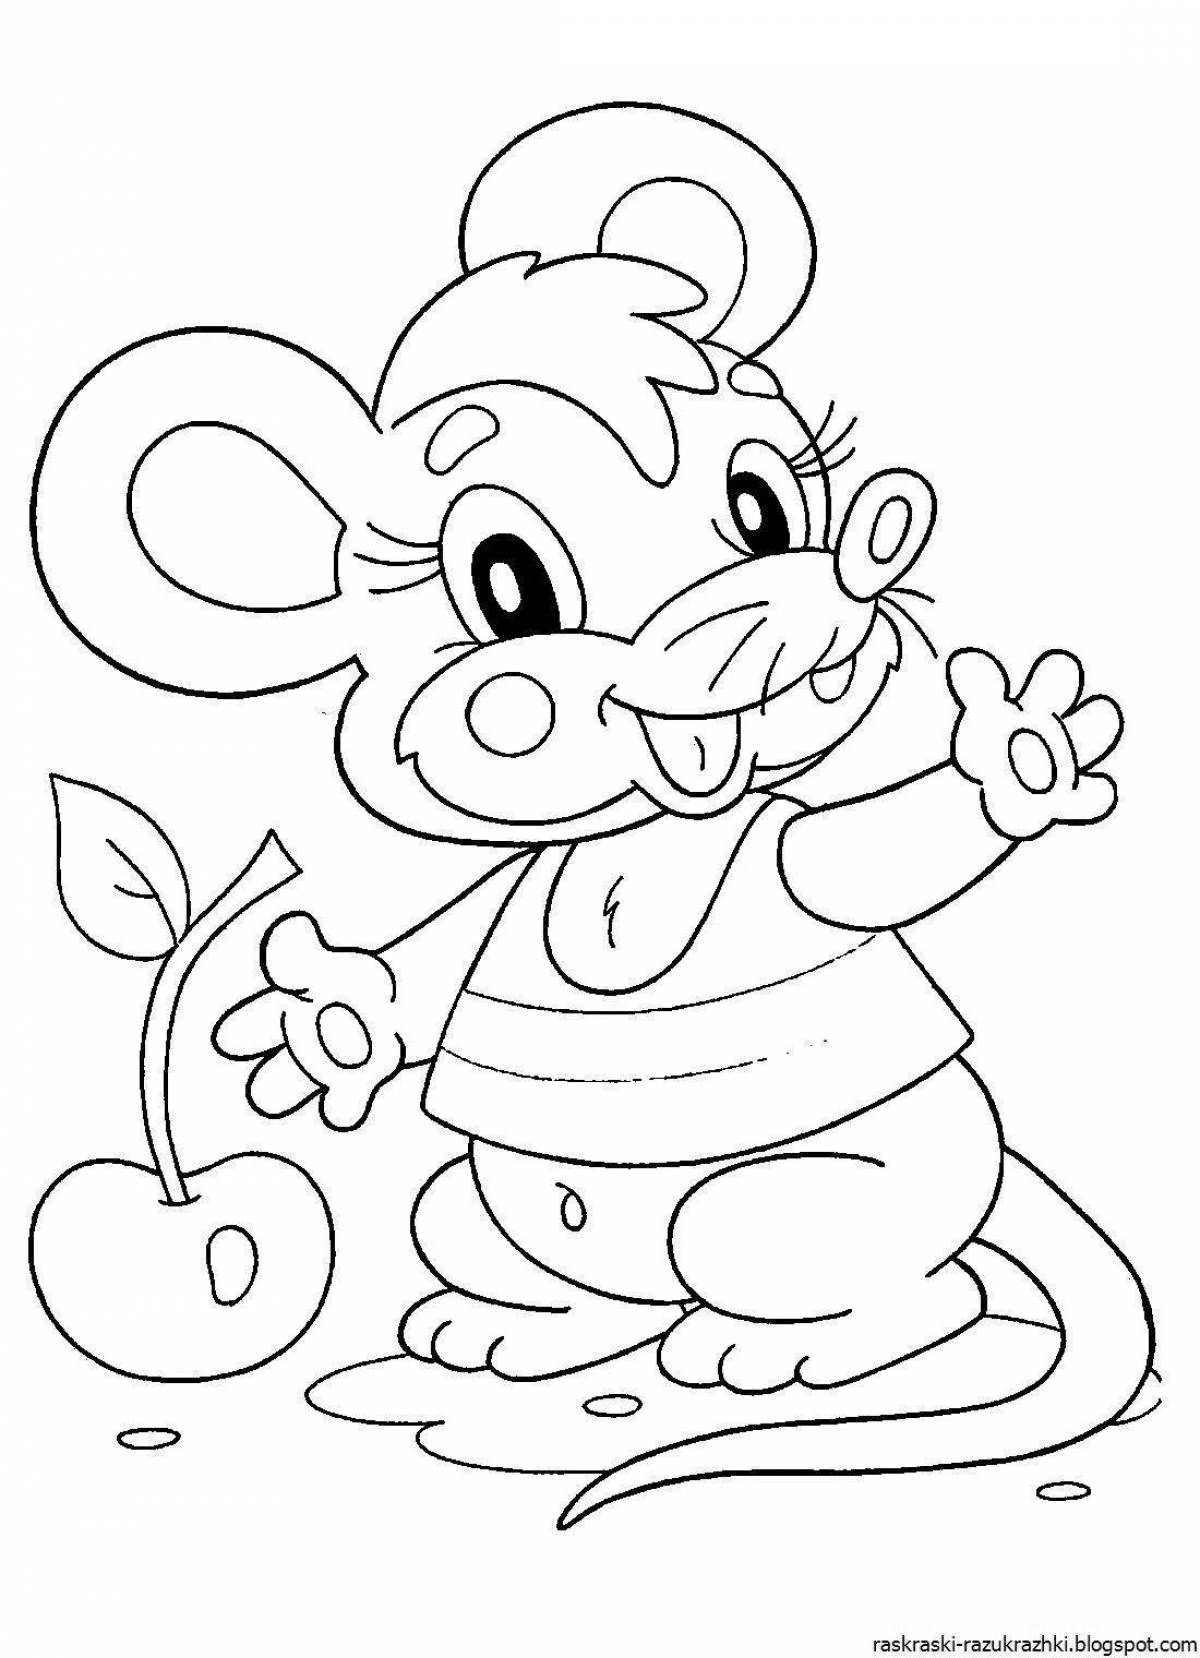 Charming mouse norushka coloring book